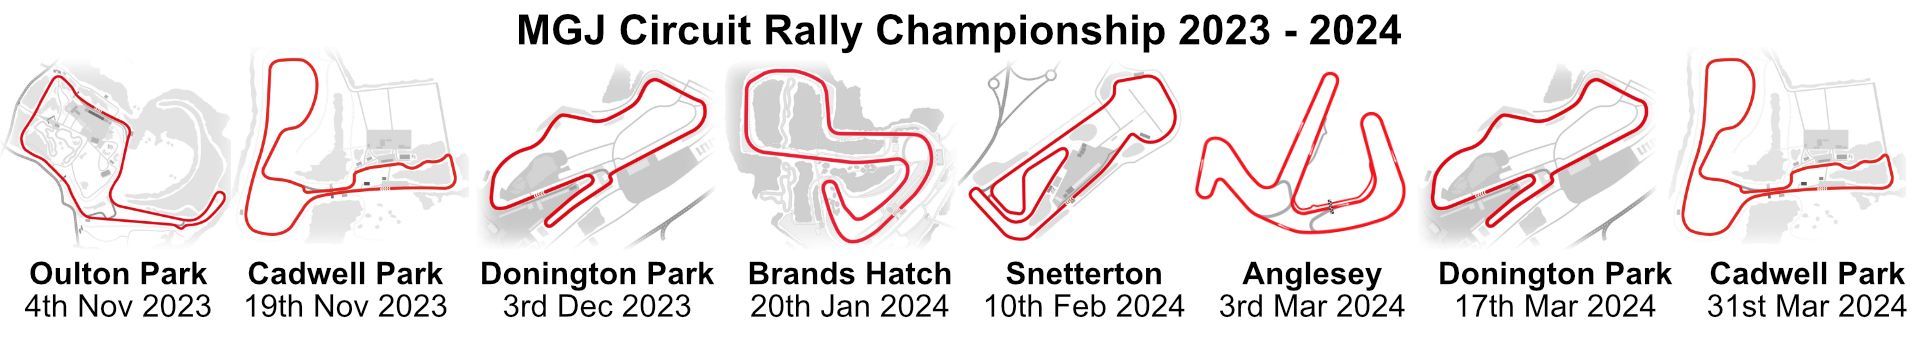 MGJ Circuit Rally Championship rounds